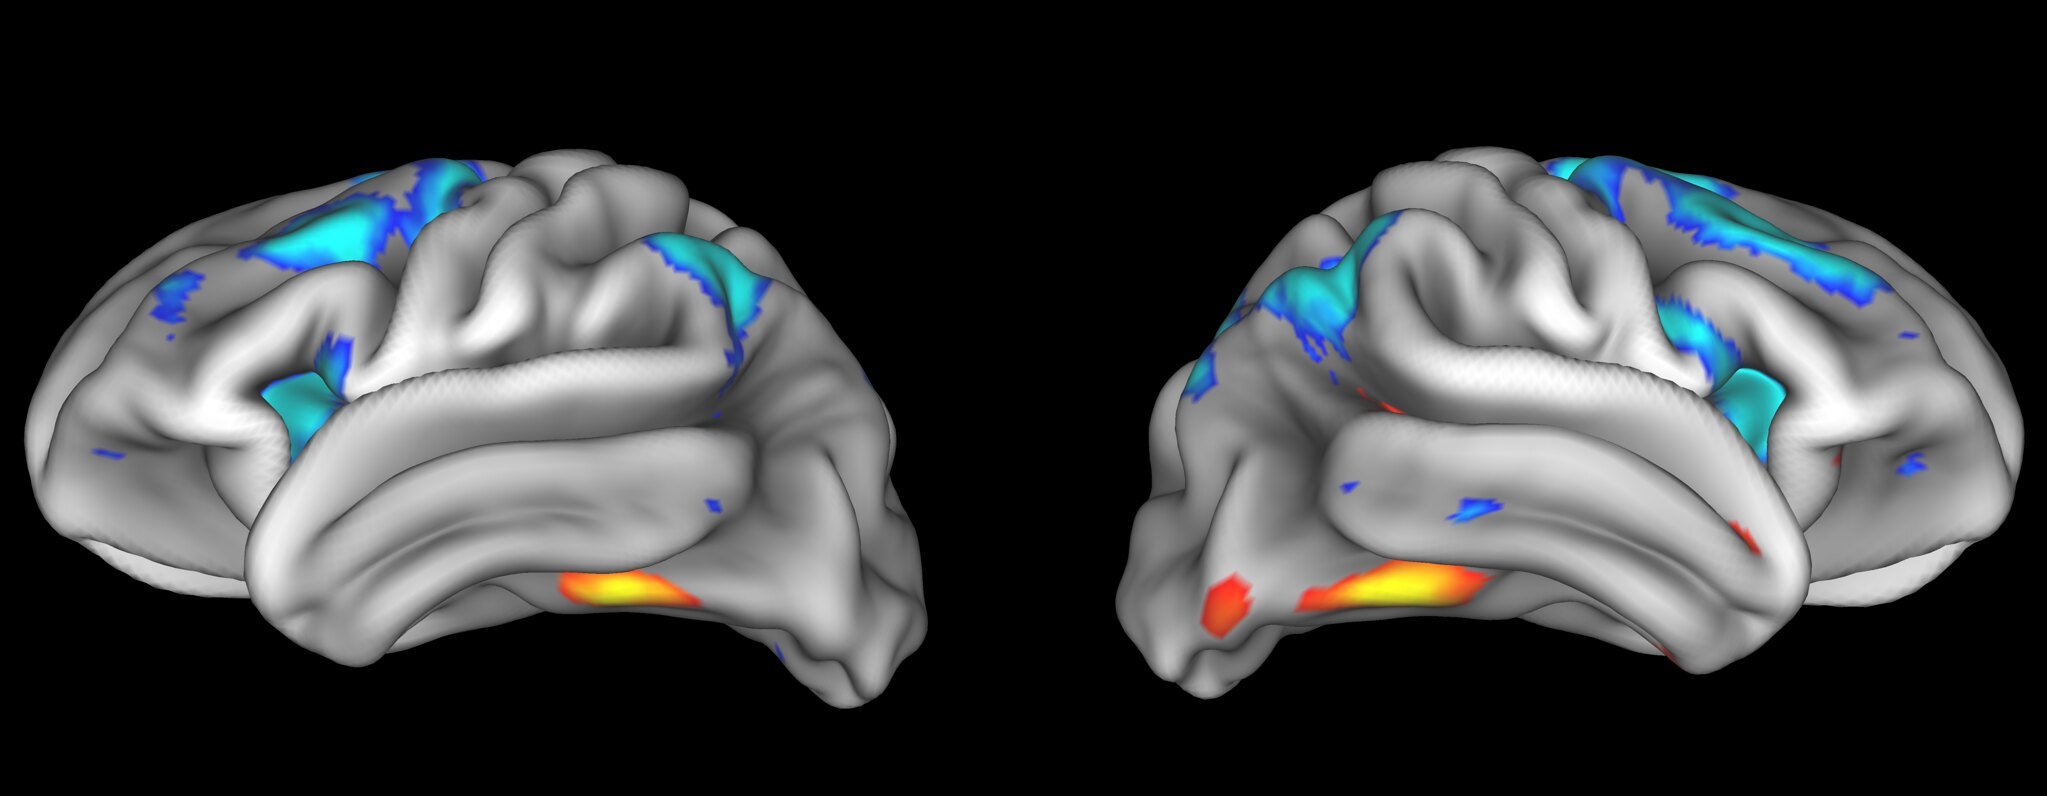 MRI of Adolescent Brain